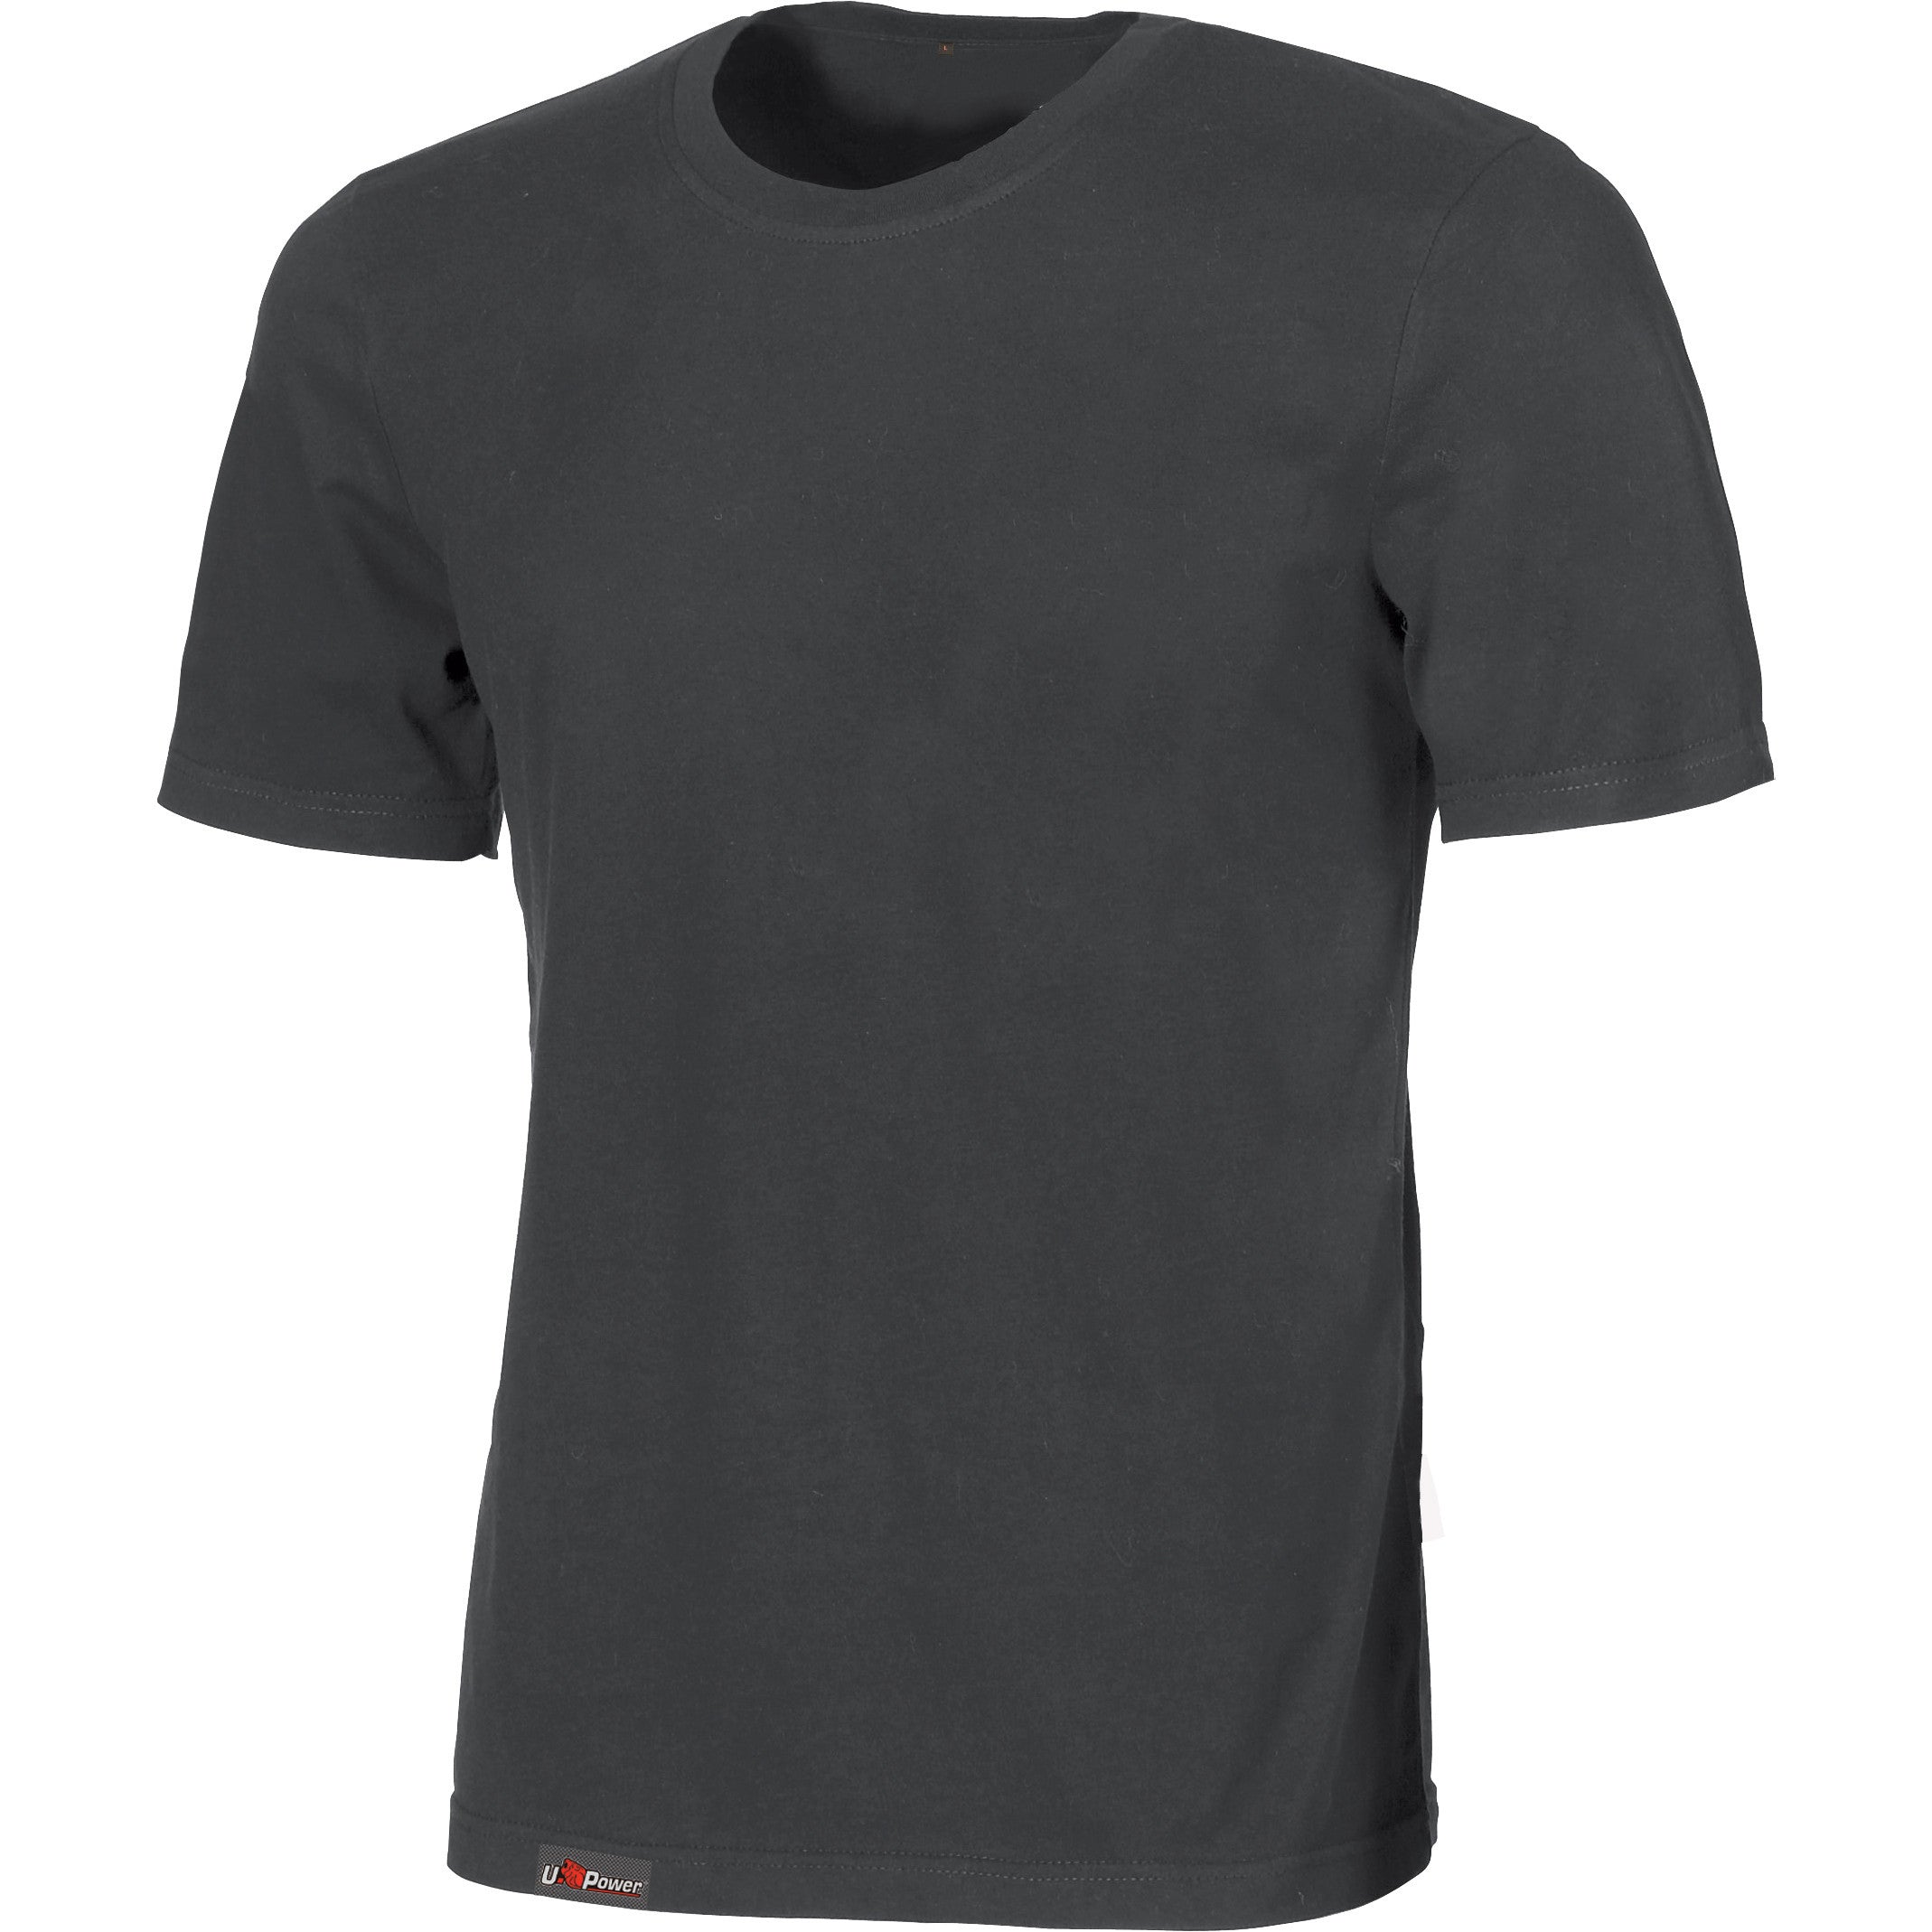 U-power t-shirt linear grigio scuro tg.l